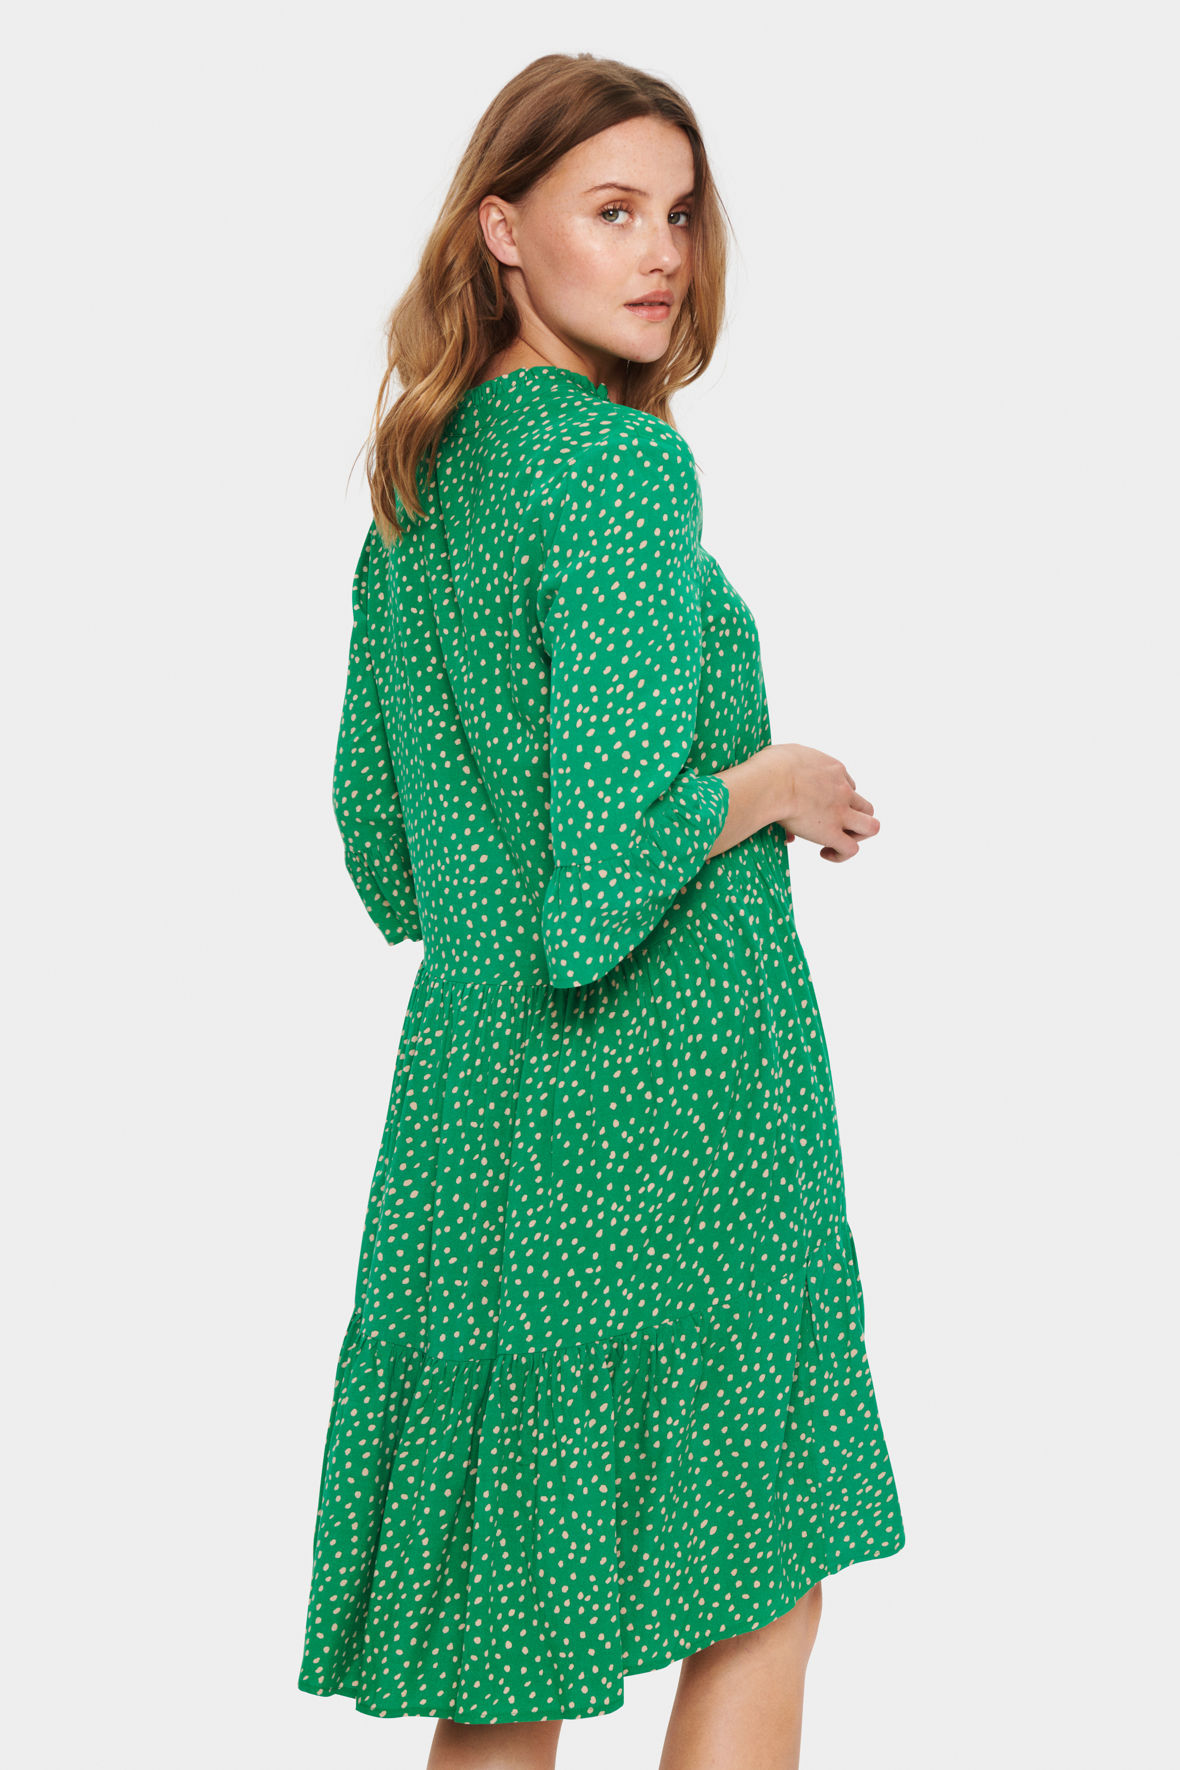 - flagrende Saint & snit sommerkjole Lohse Tropez Hos -løst grøn Dress - smuk